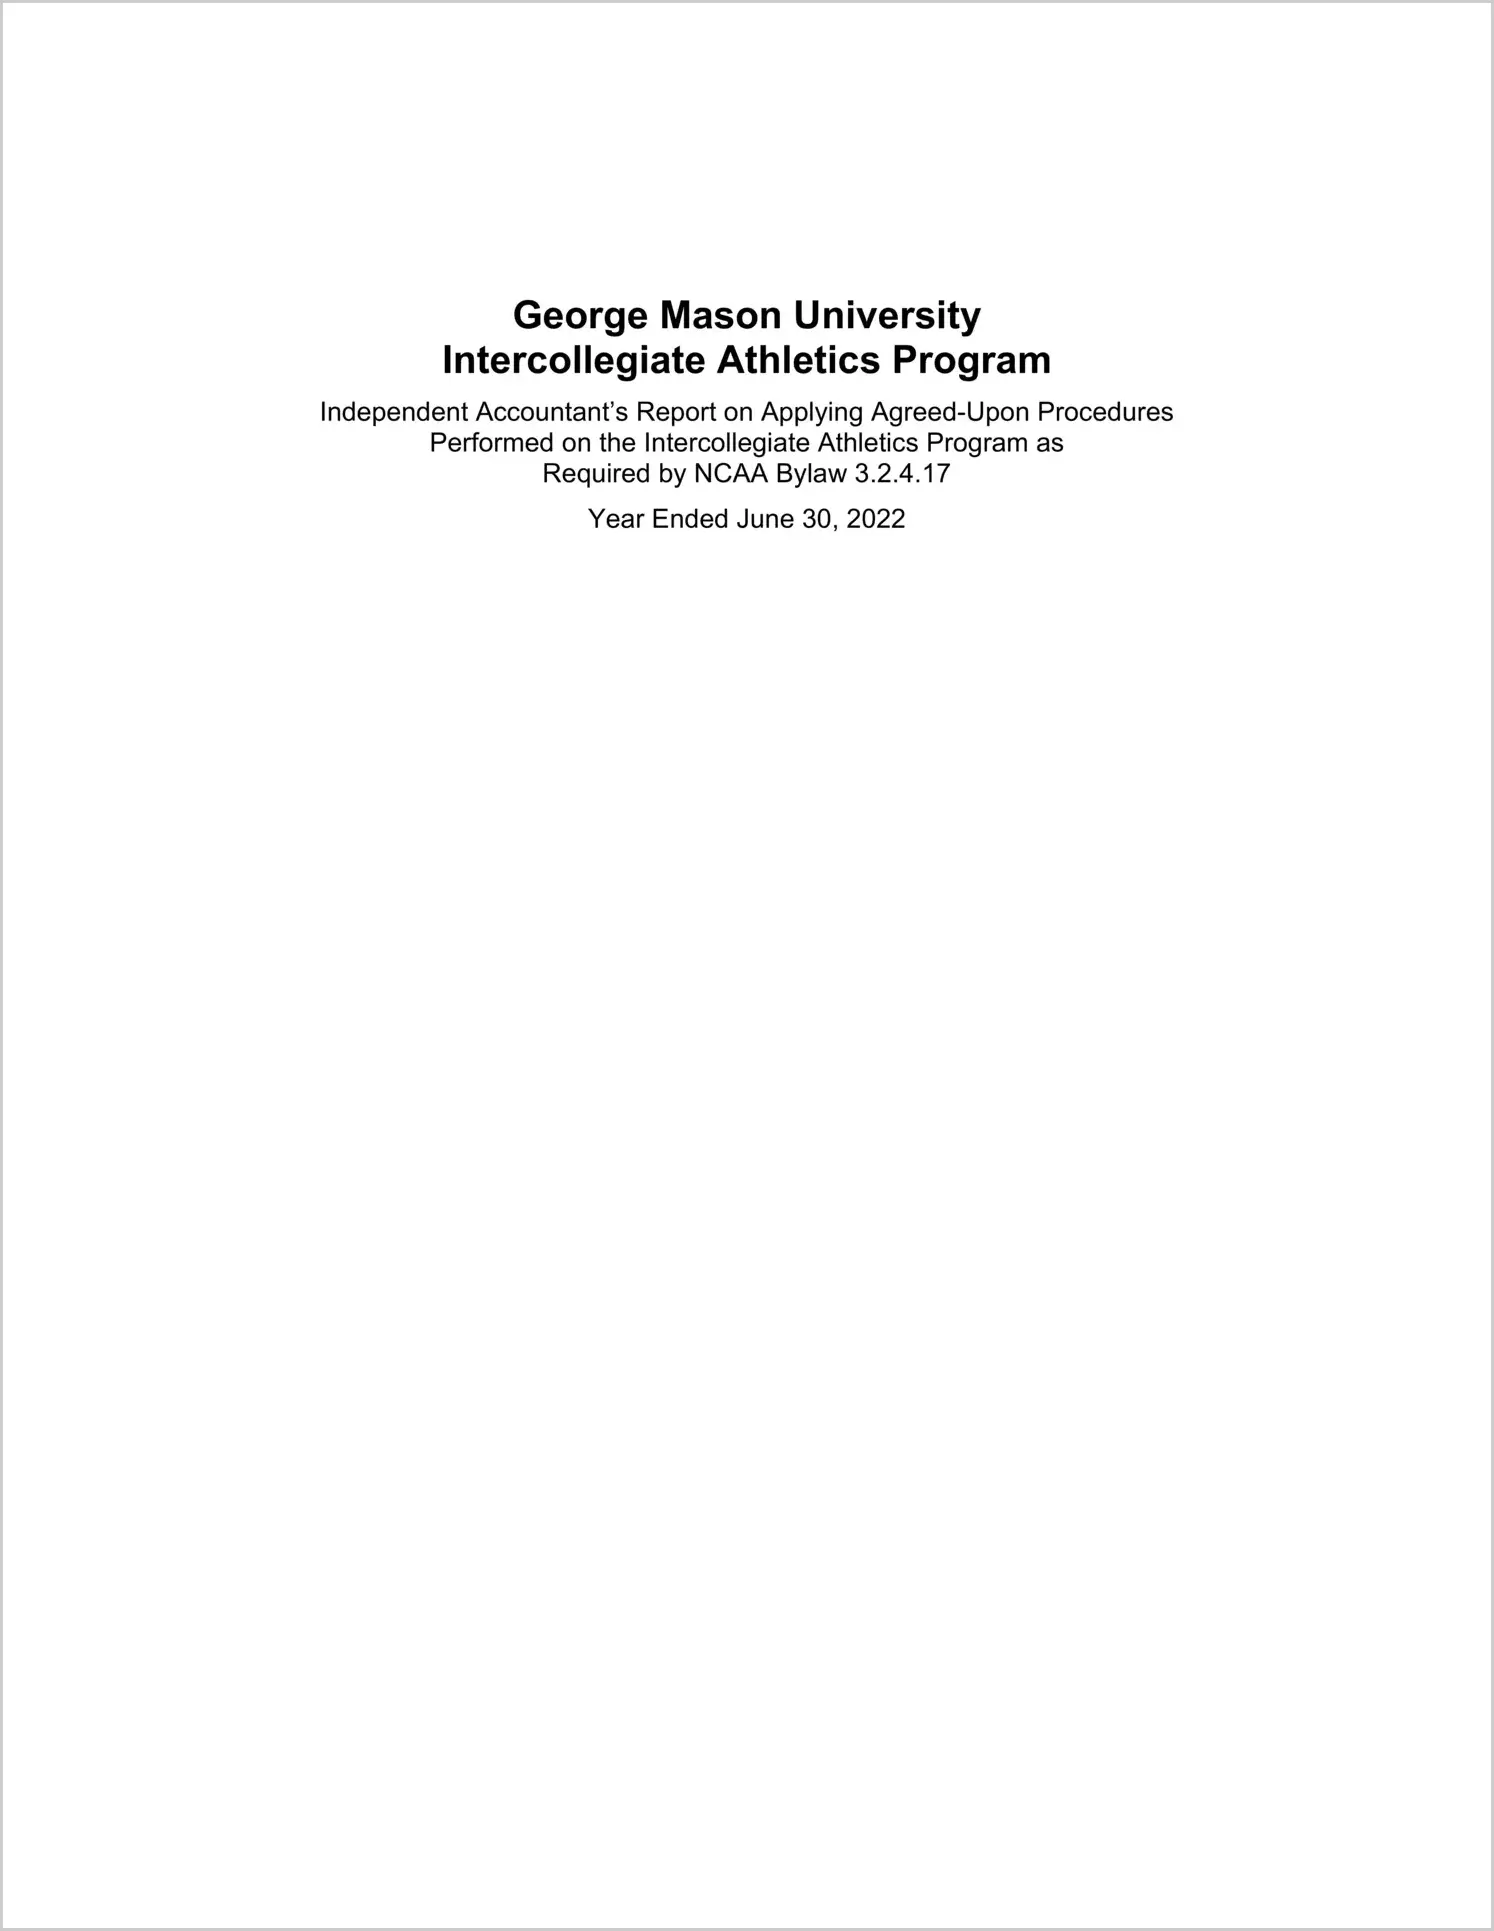 George Mason University Intercollegiate Athletics Programs for the year ended June 30, 2022